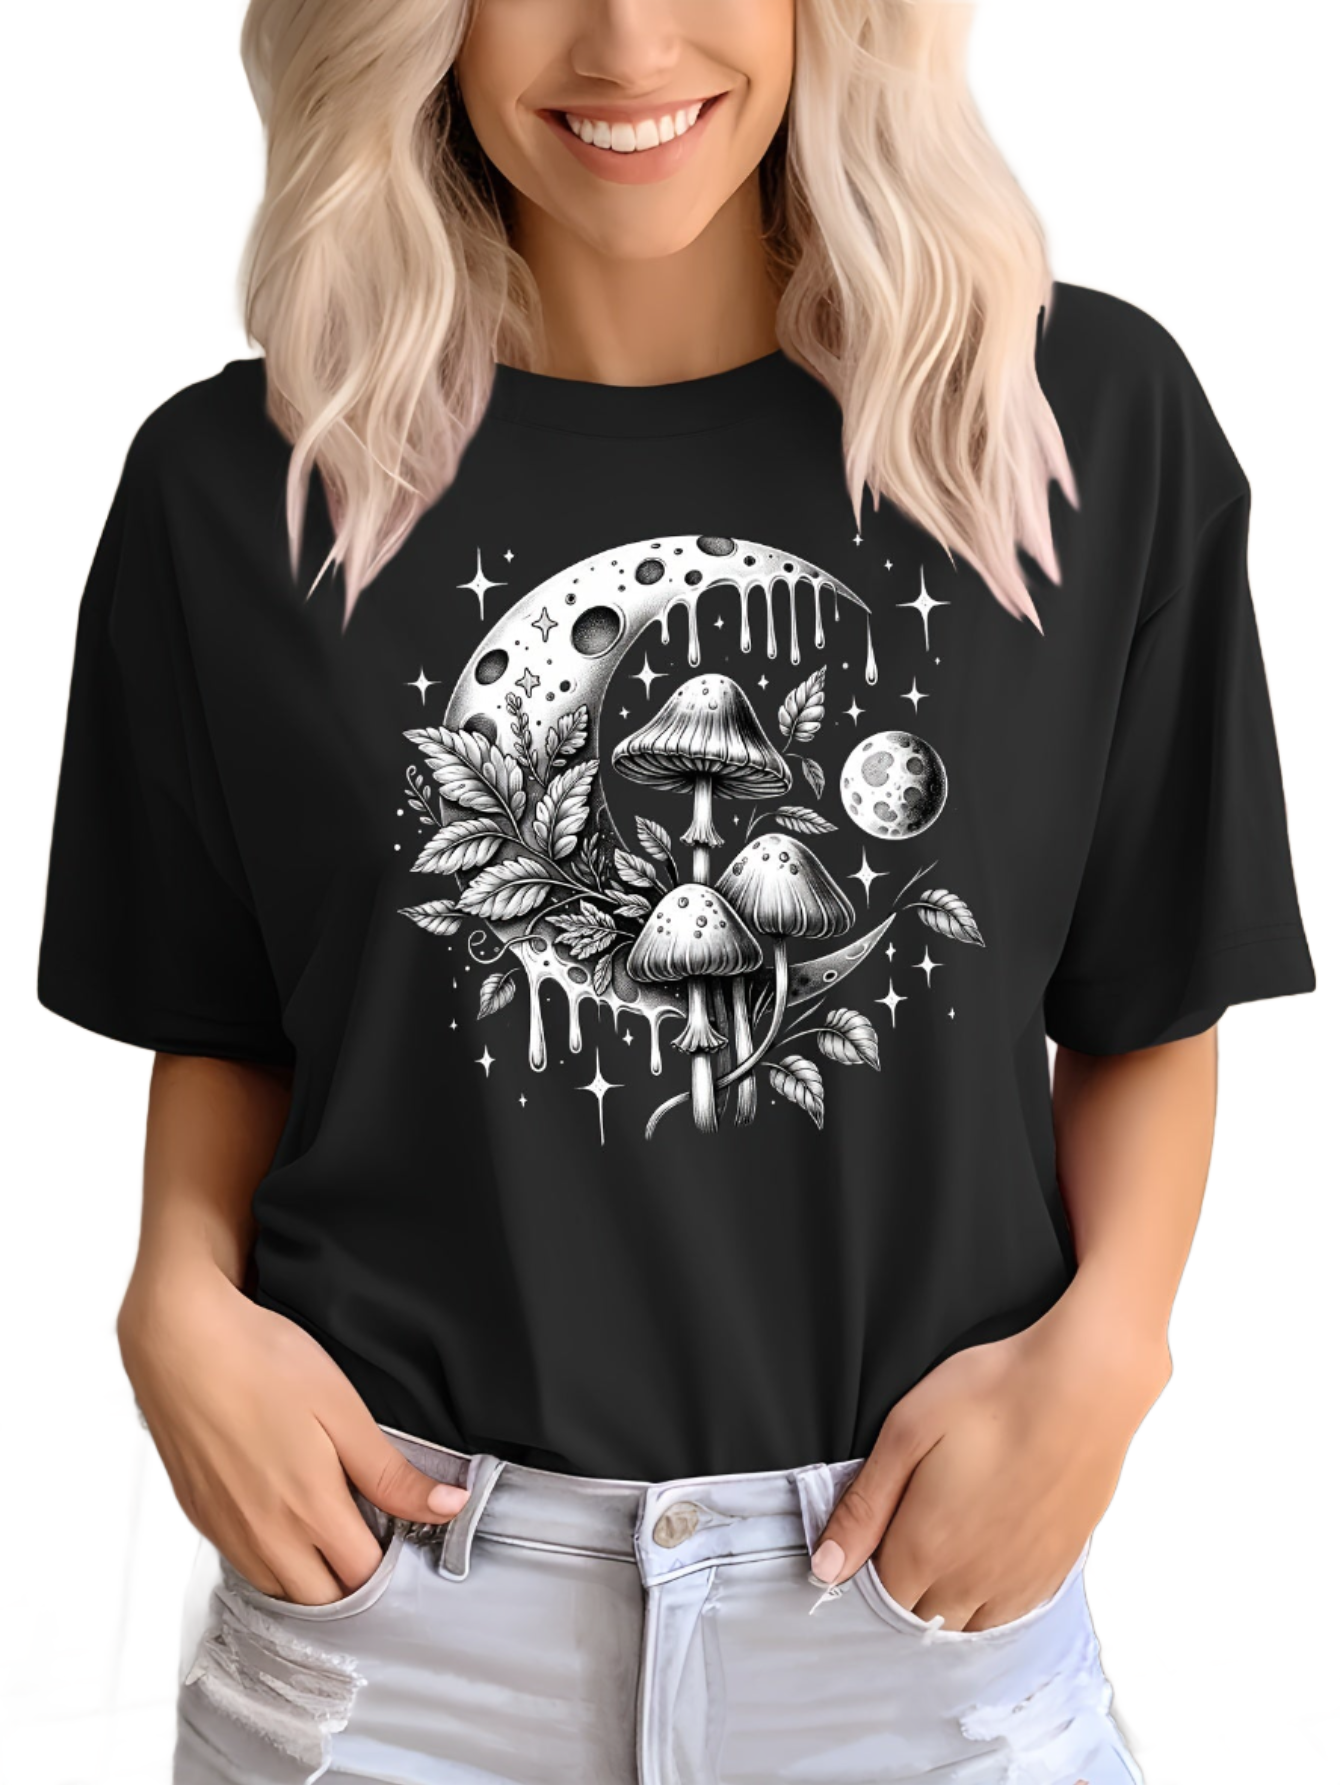 Mushroom & Moon Print T-shirt, Casual Crew Neck Short Sleeve Top For Spring & Summer, Women's Clothing